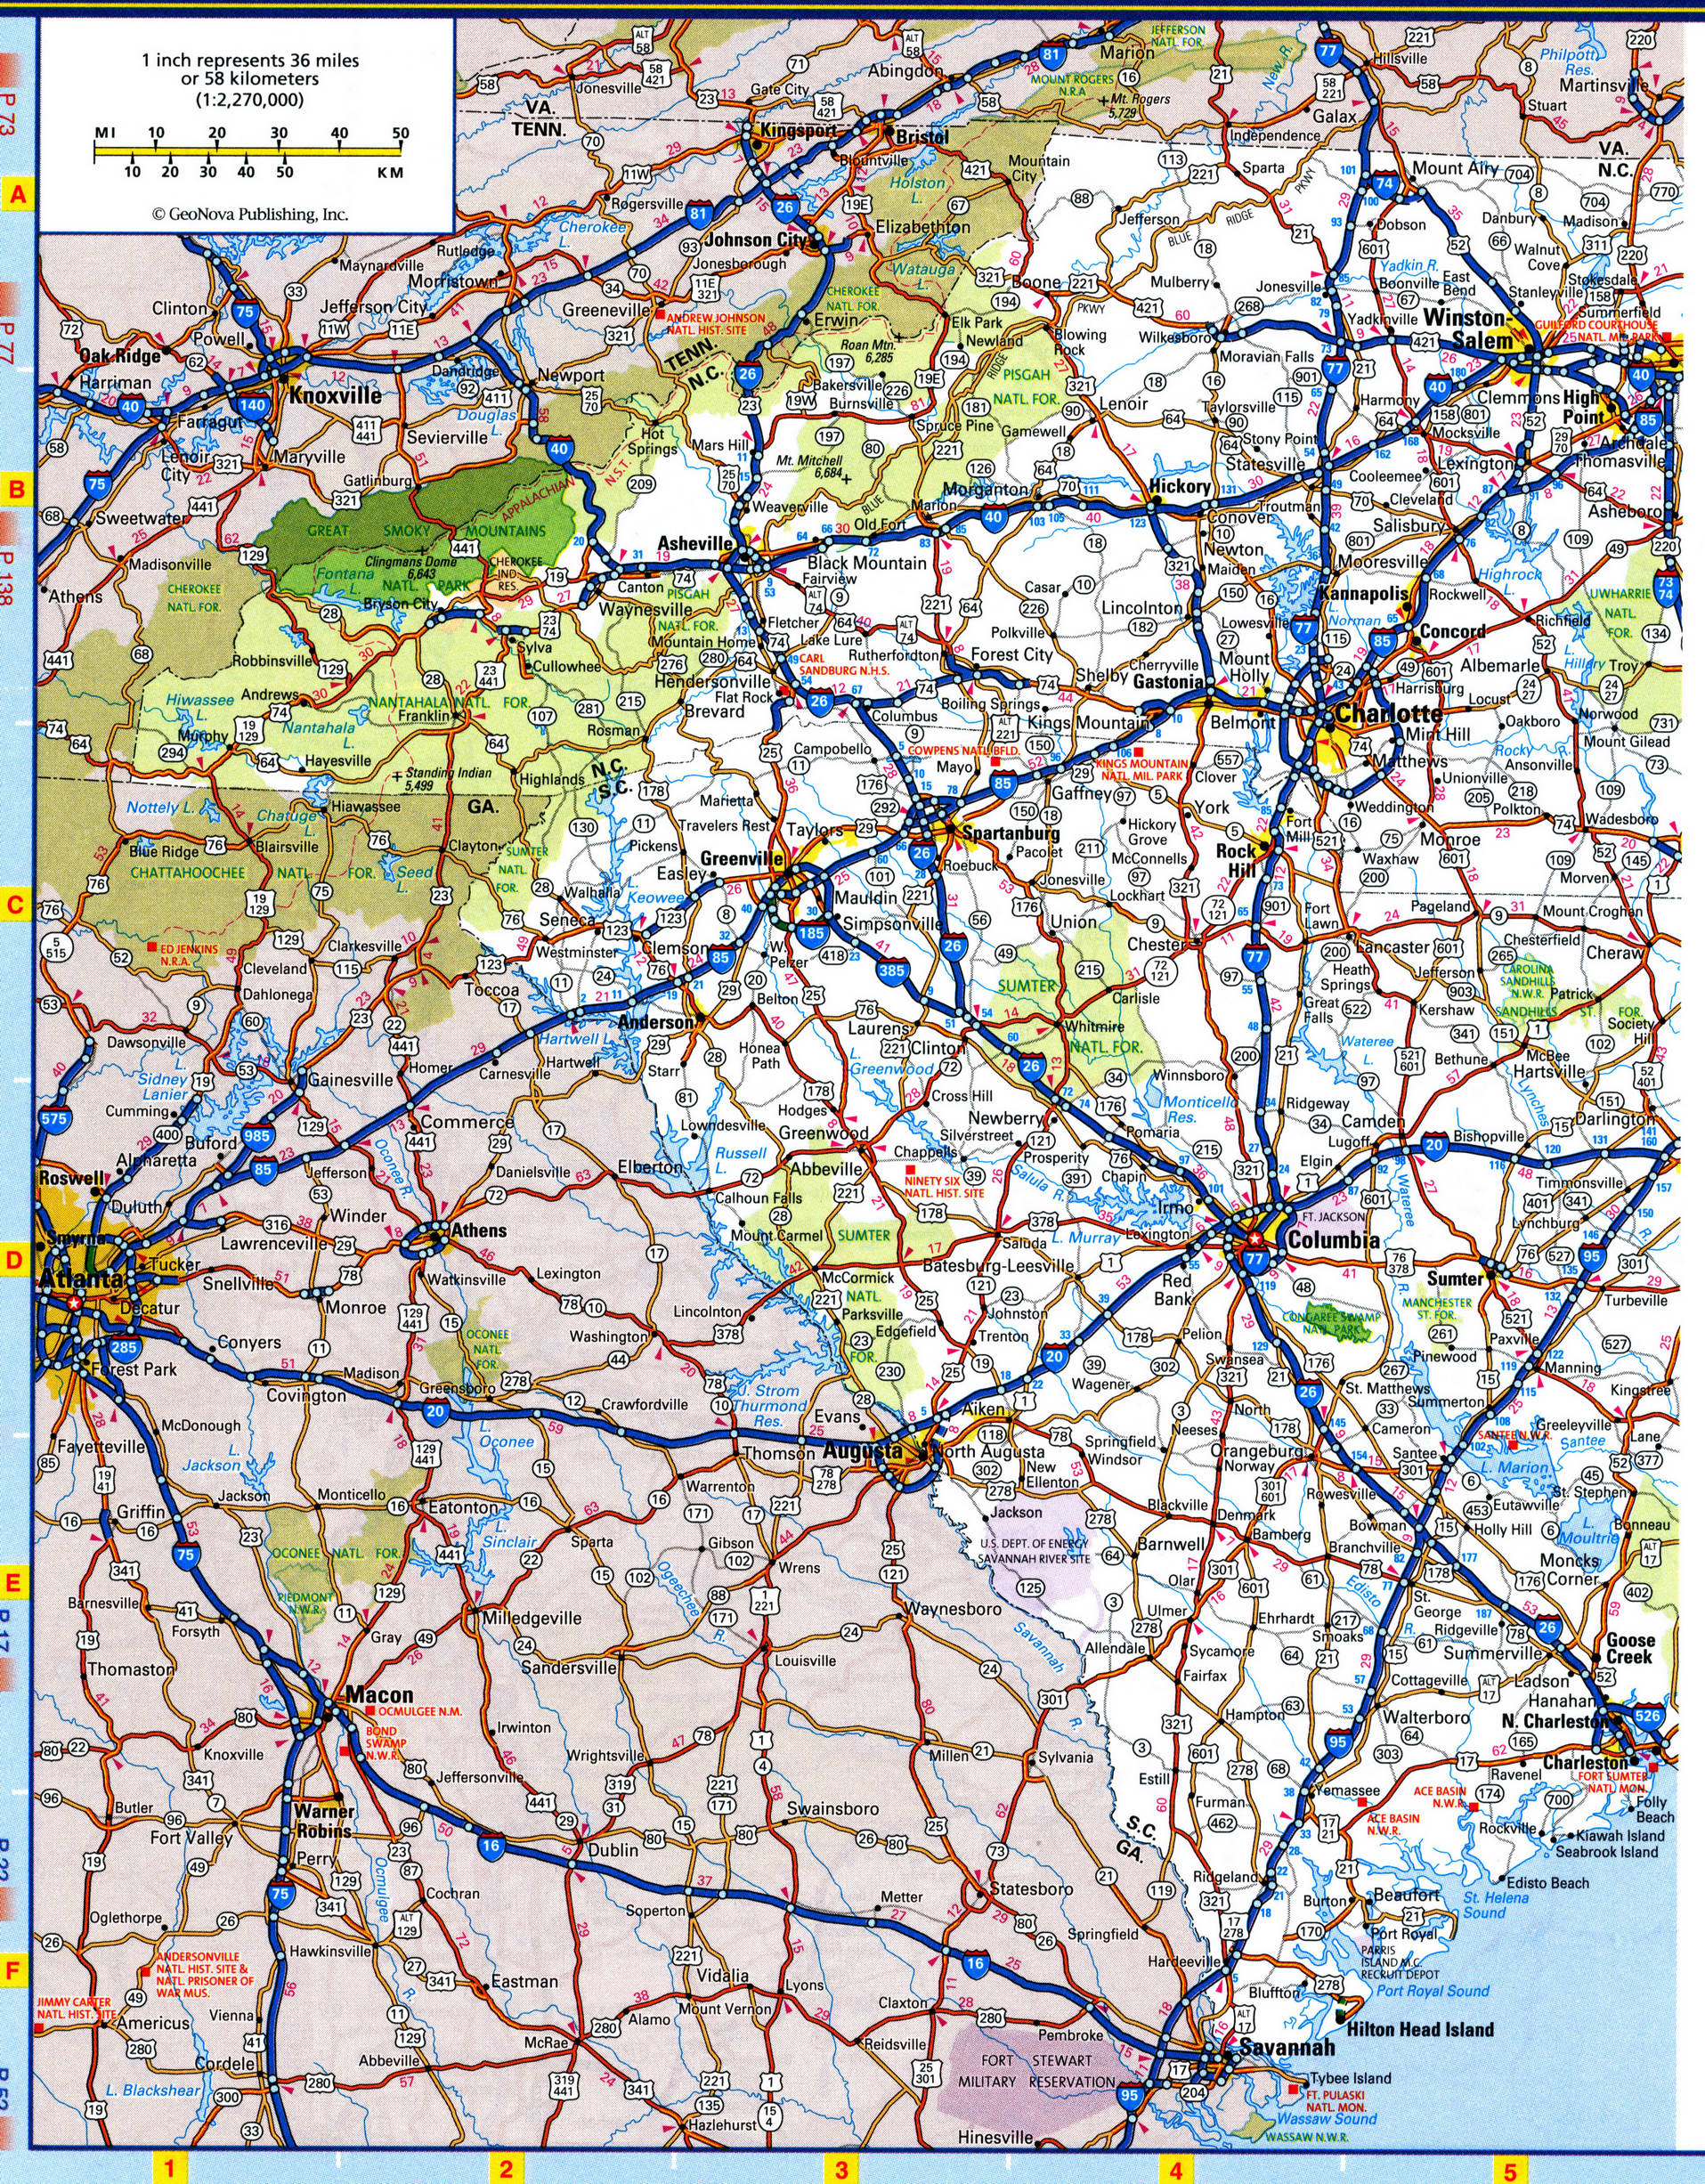 South Carolina highways map